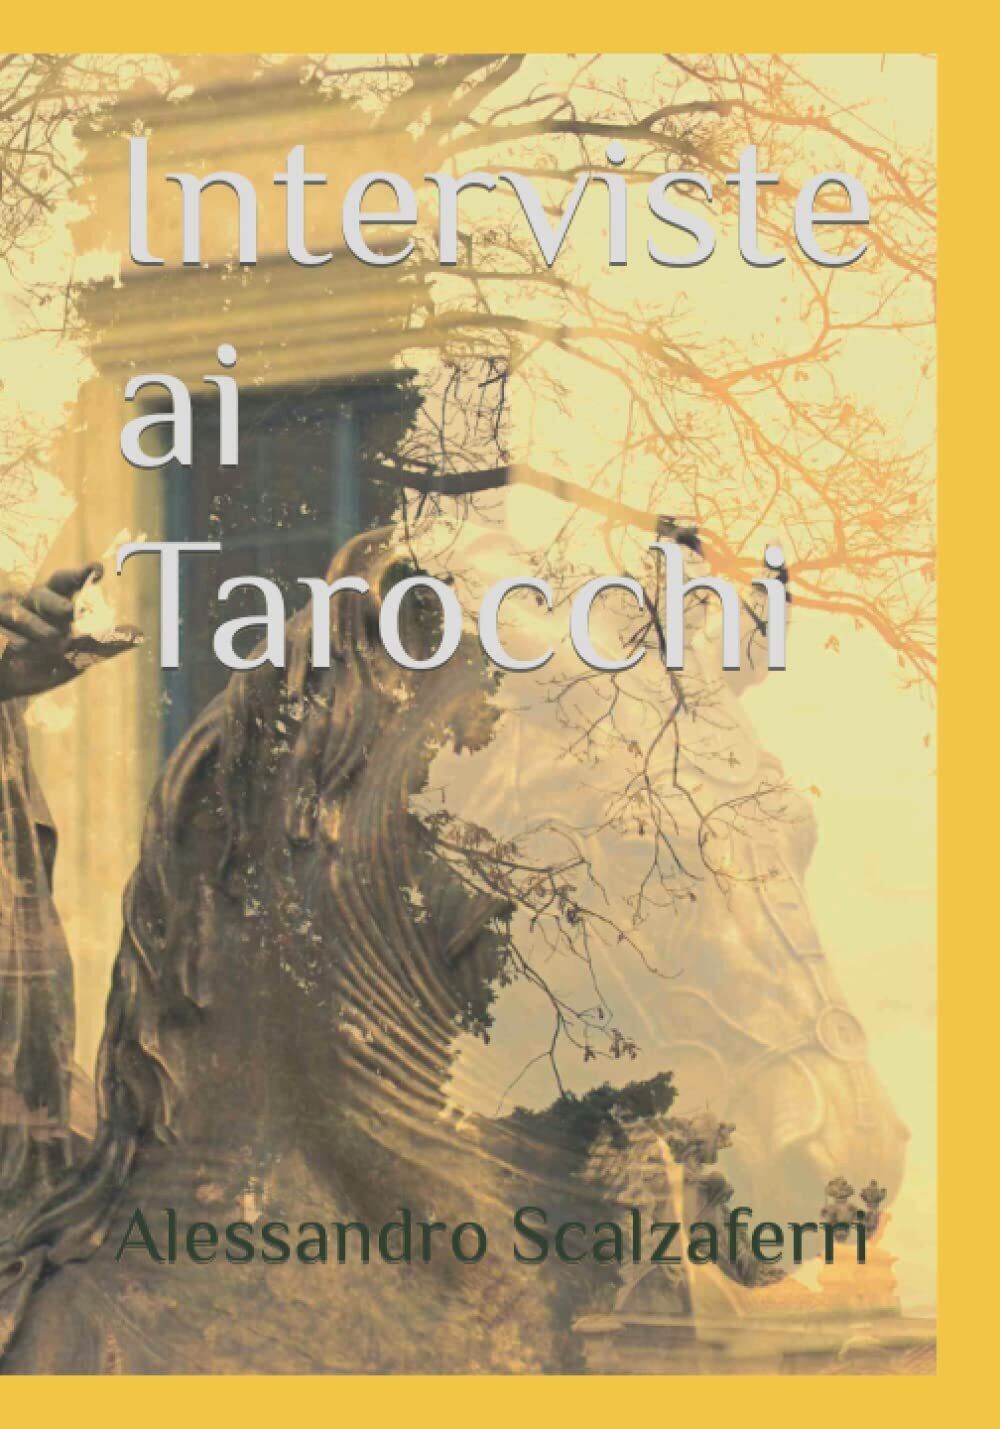 Interviste ai Tarocchi - Alessandro Scalzaferri - Independently published, 2022